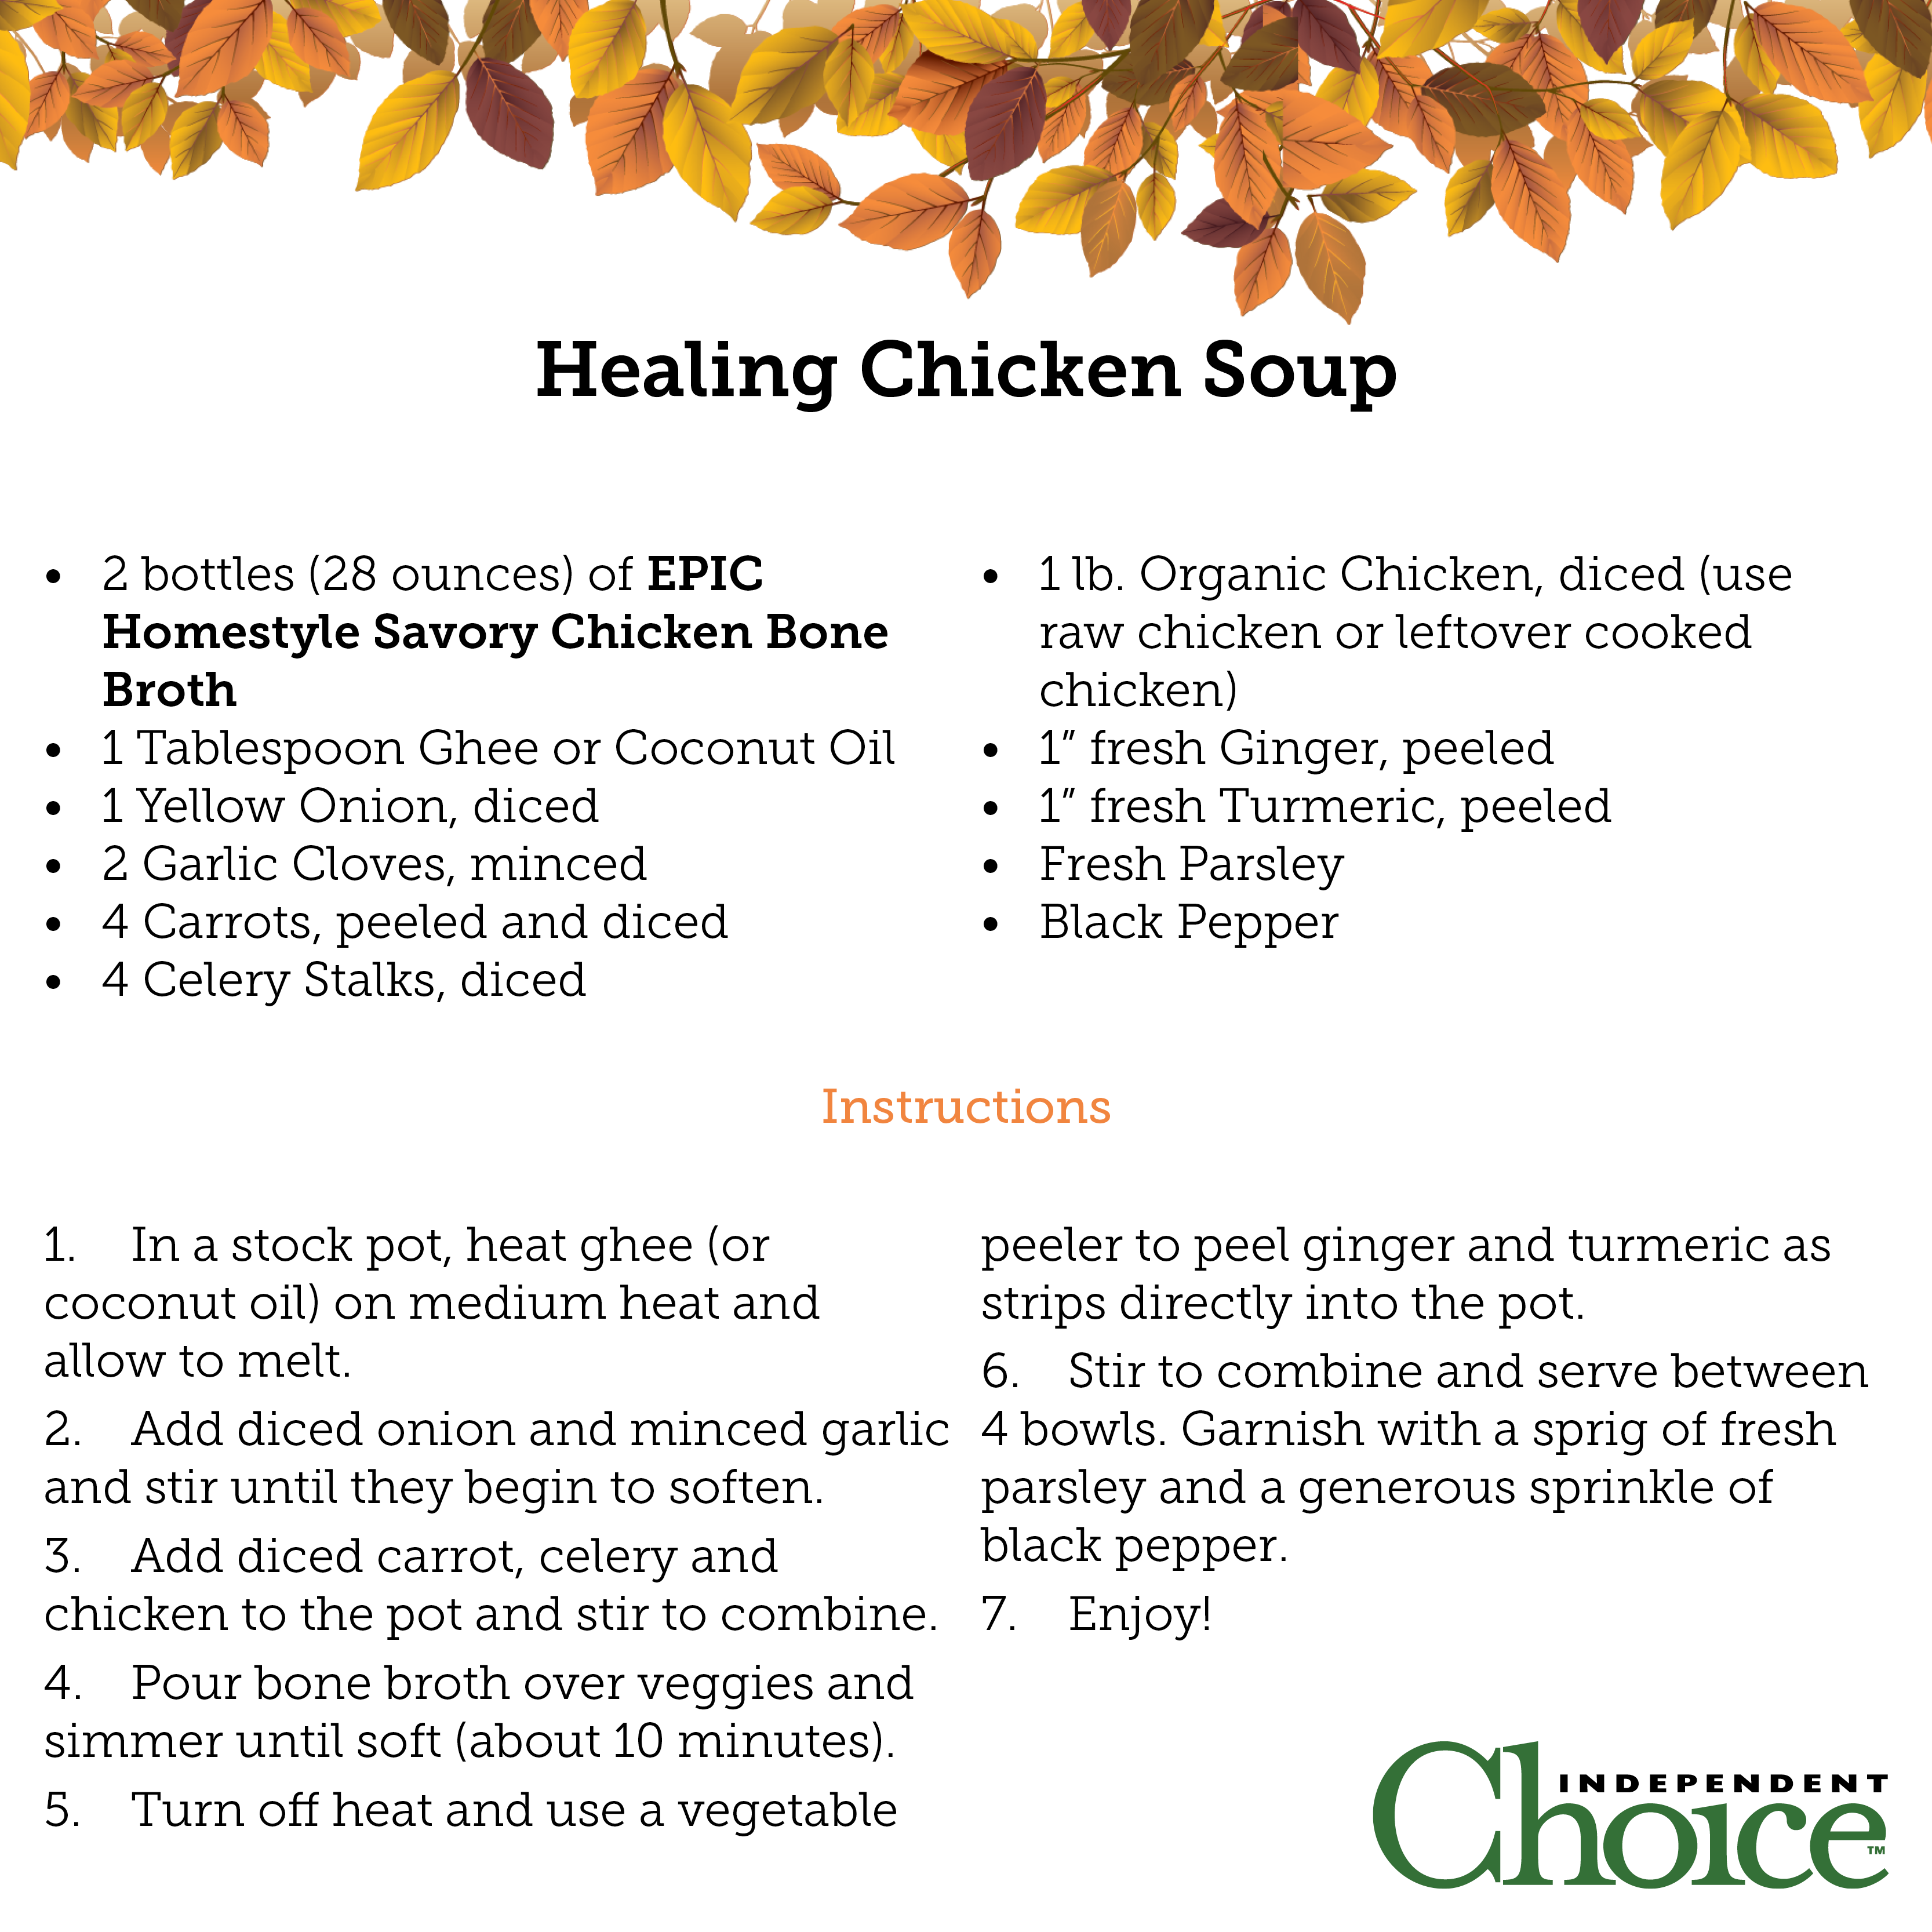 Healing Chicken Soup